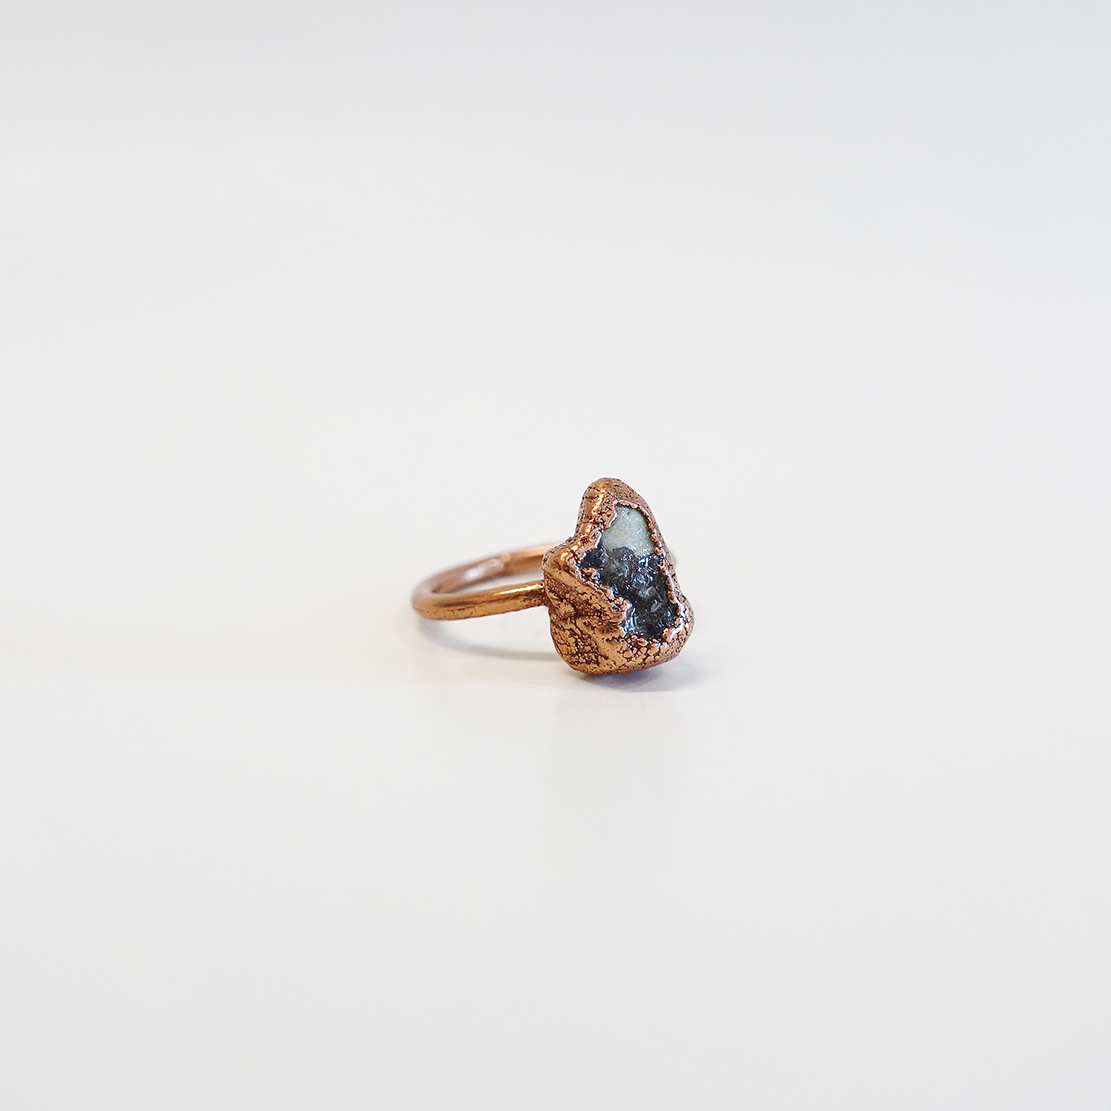 Smoky Quartz Solitare Copper-Plated Ring (Size 6.5)